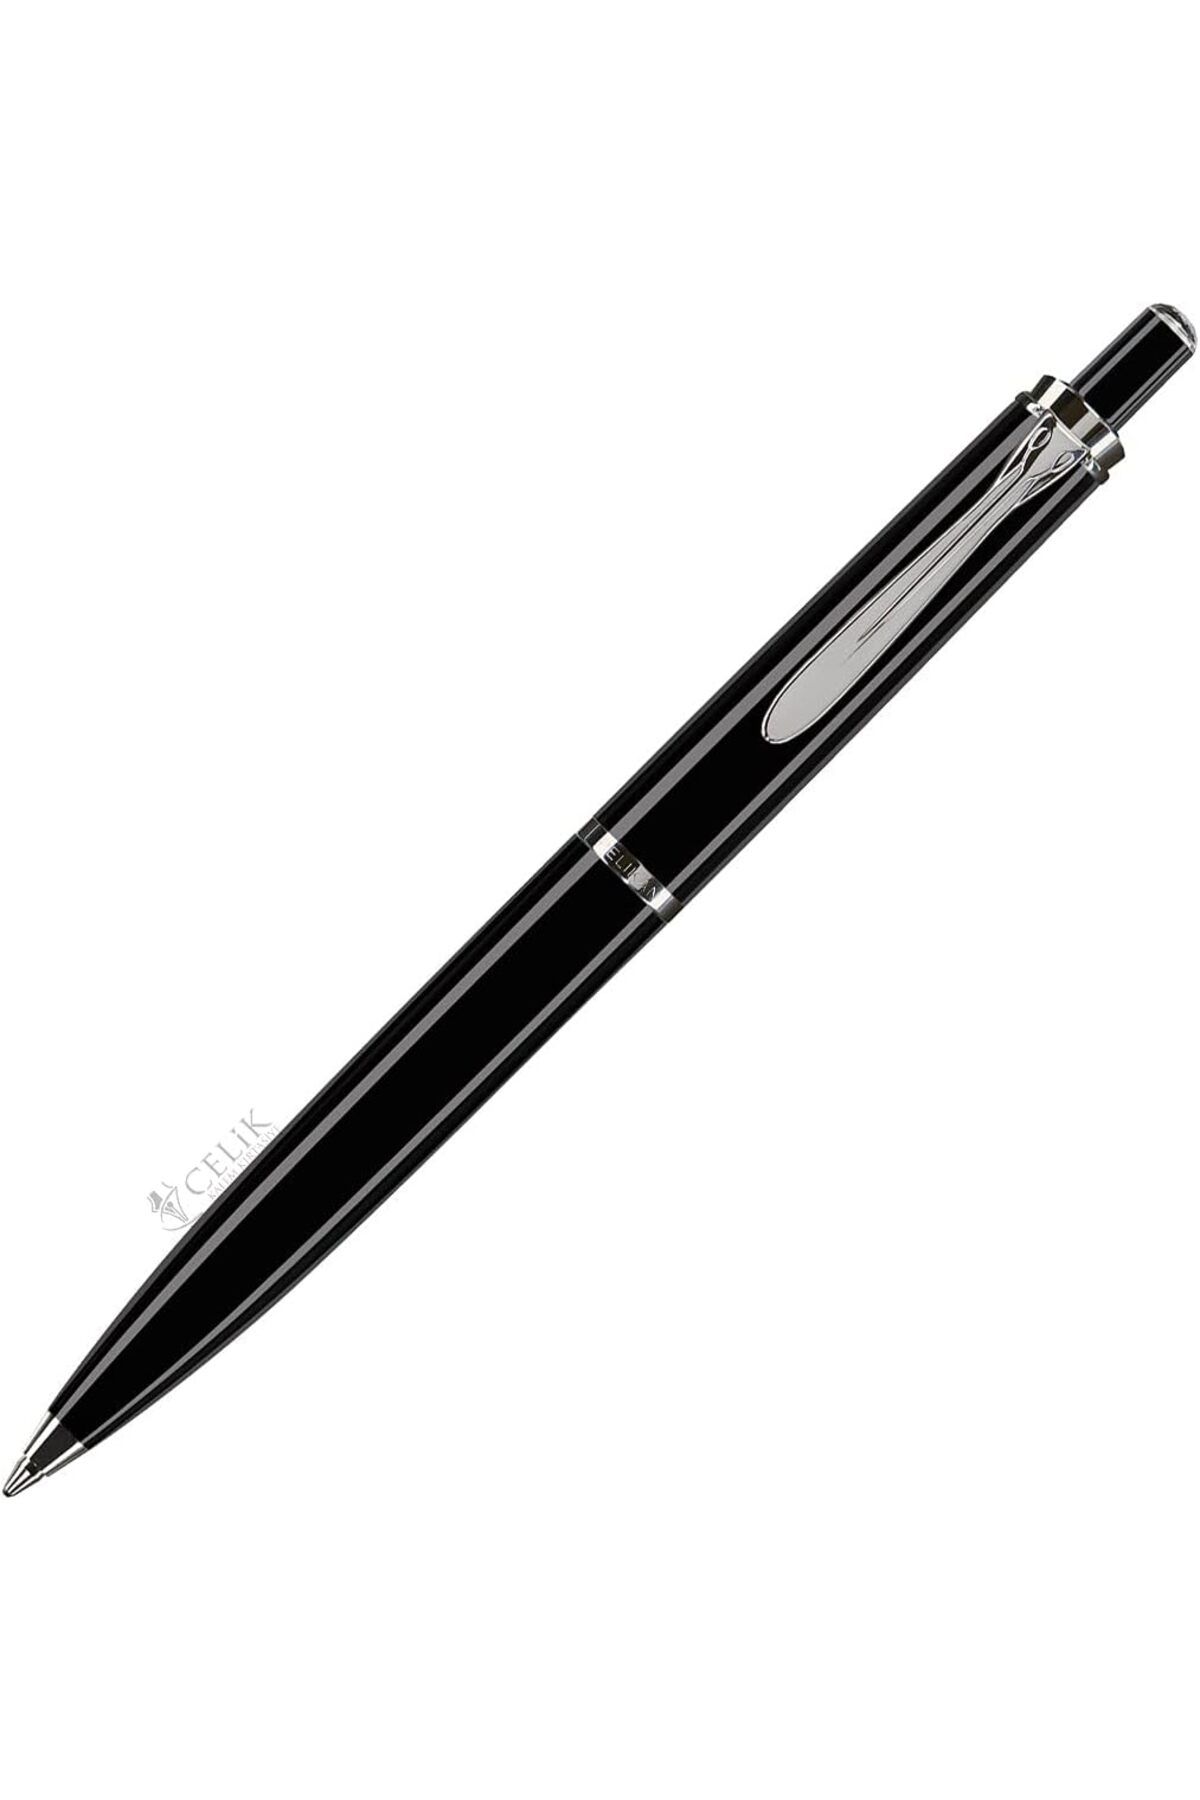 Pelikan Klasik Seri K205 Siyah Tükenmez Kalem